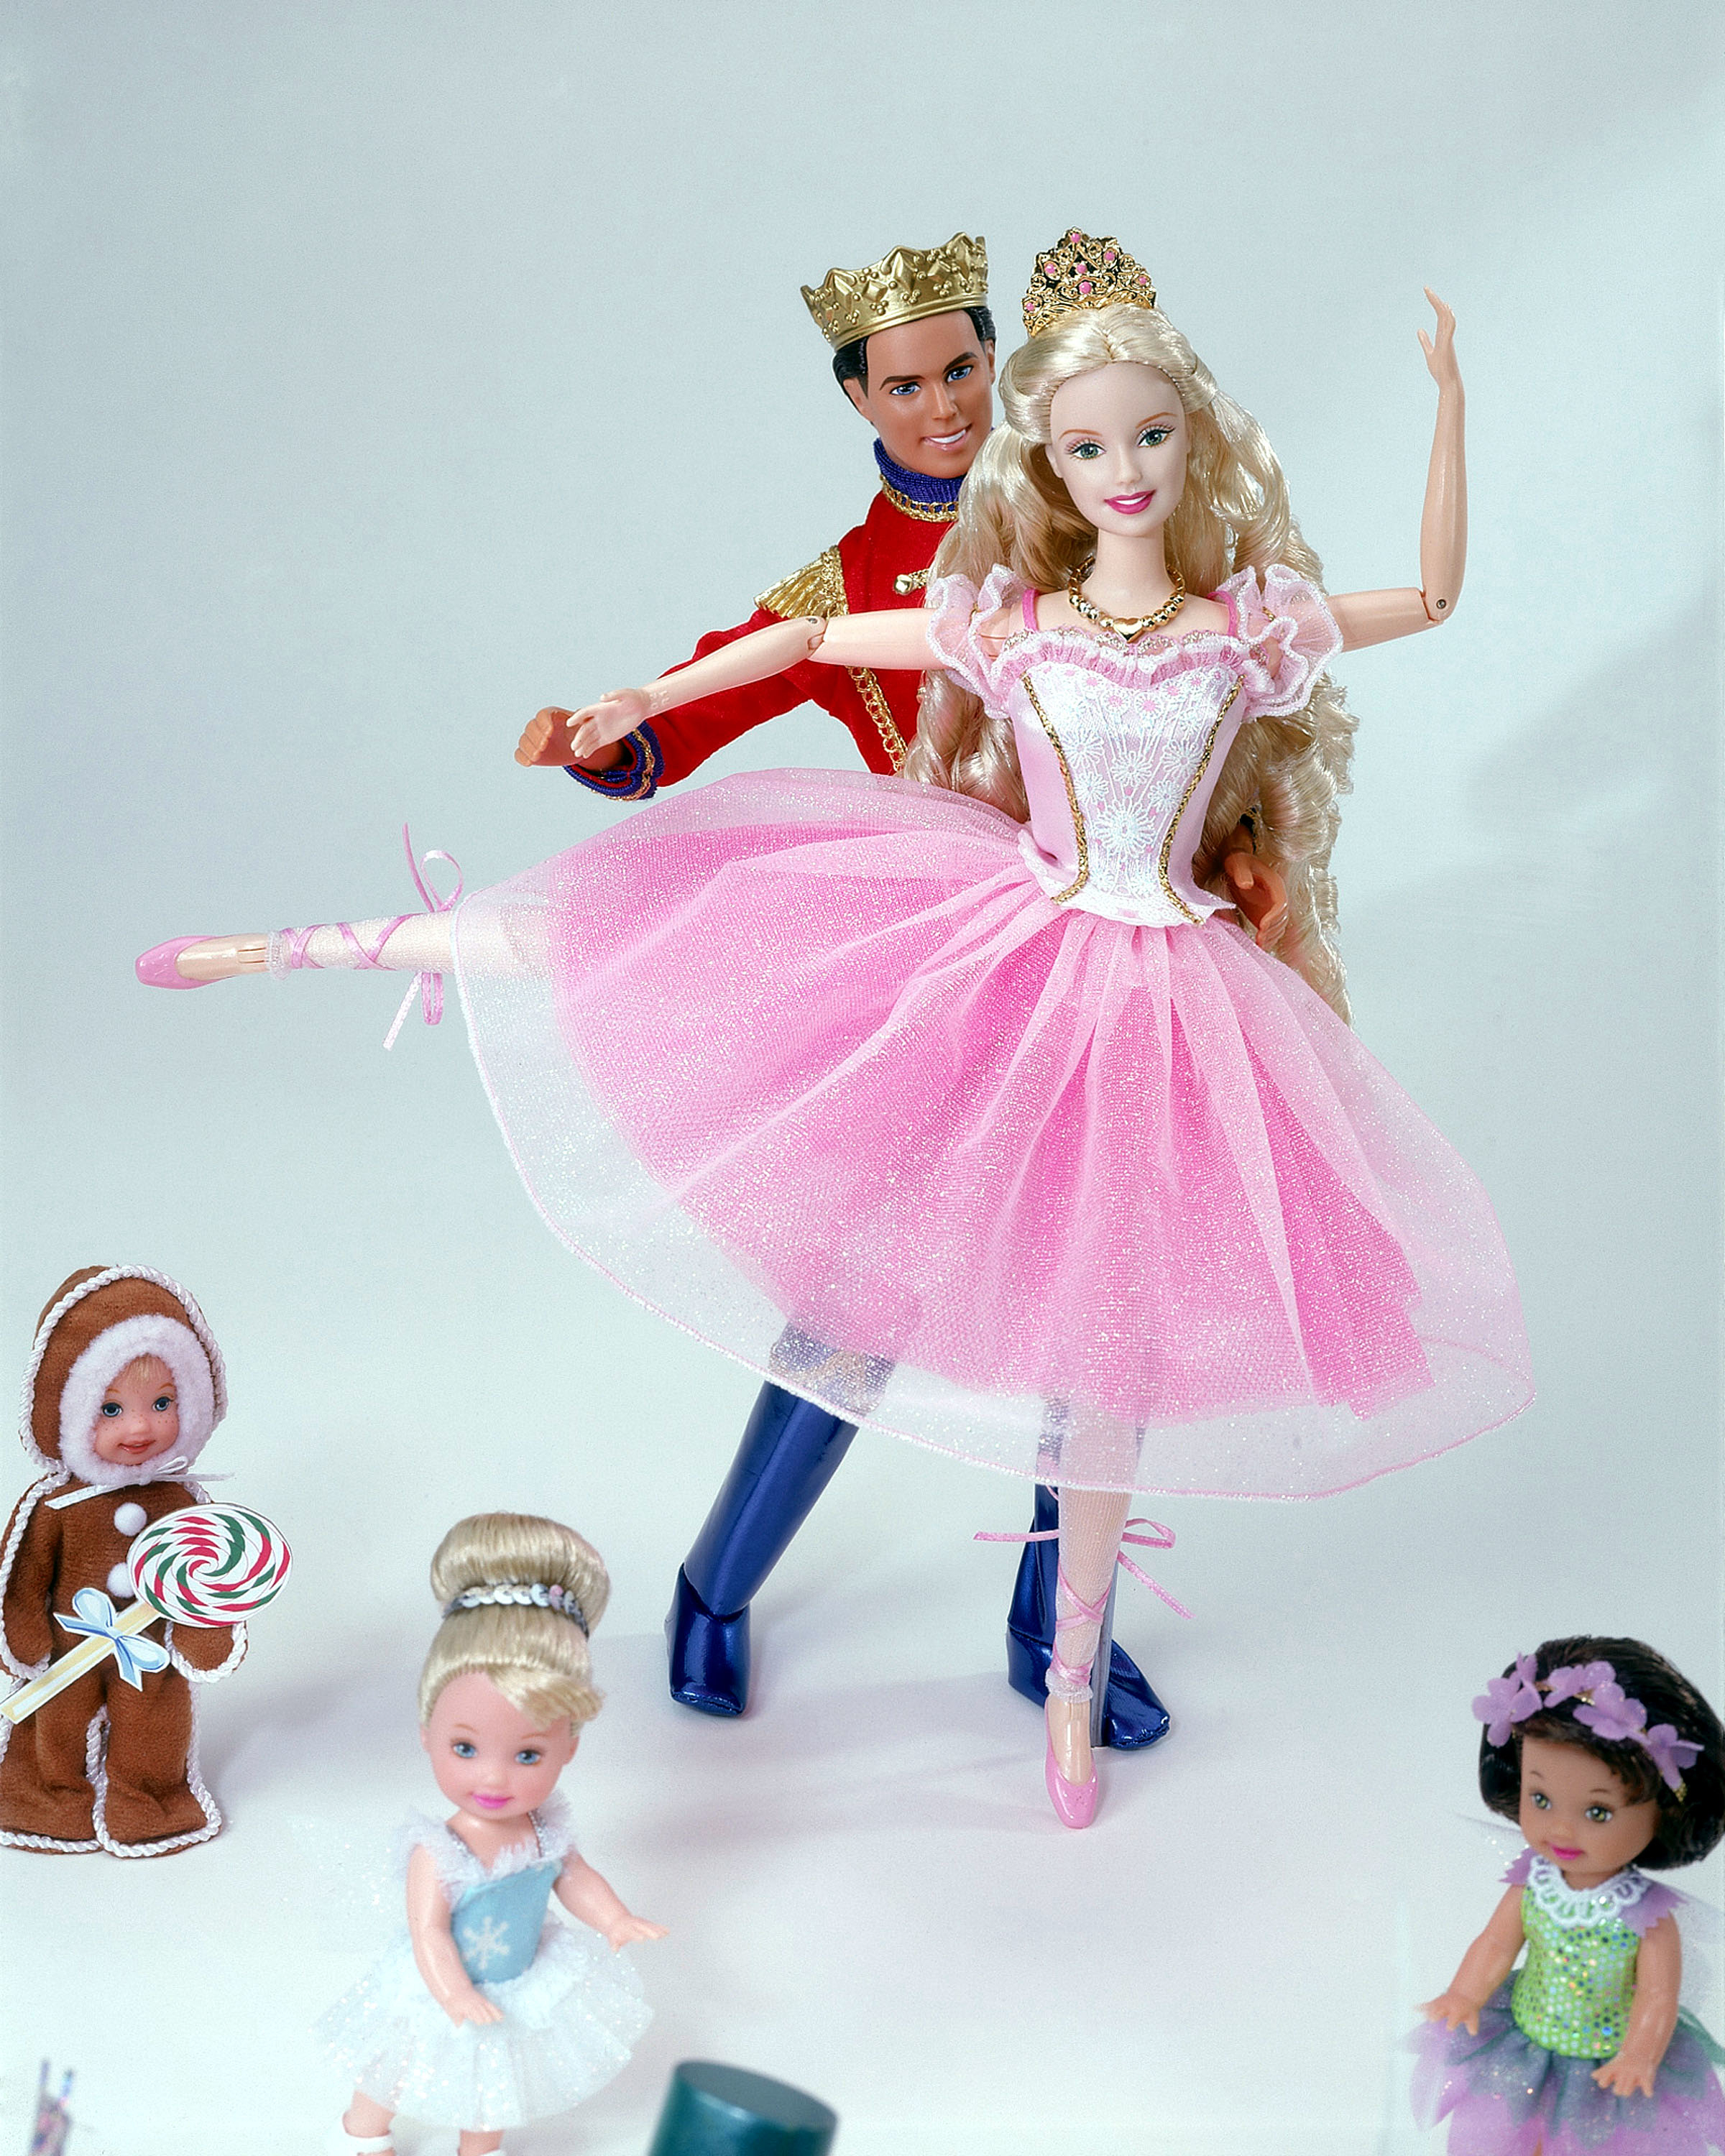 Mattel&#x27;s World of Barbie in the Nutcracker doll 2021 holiday season